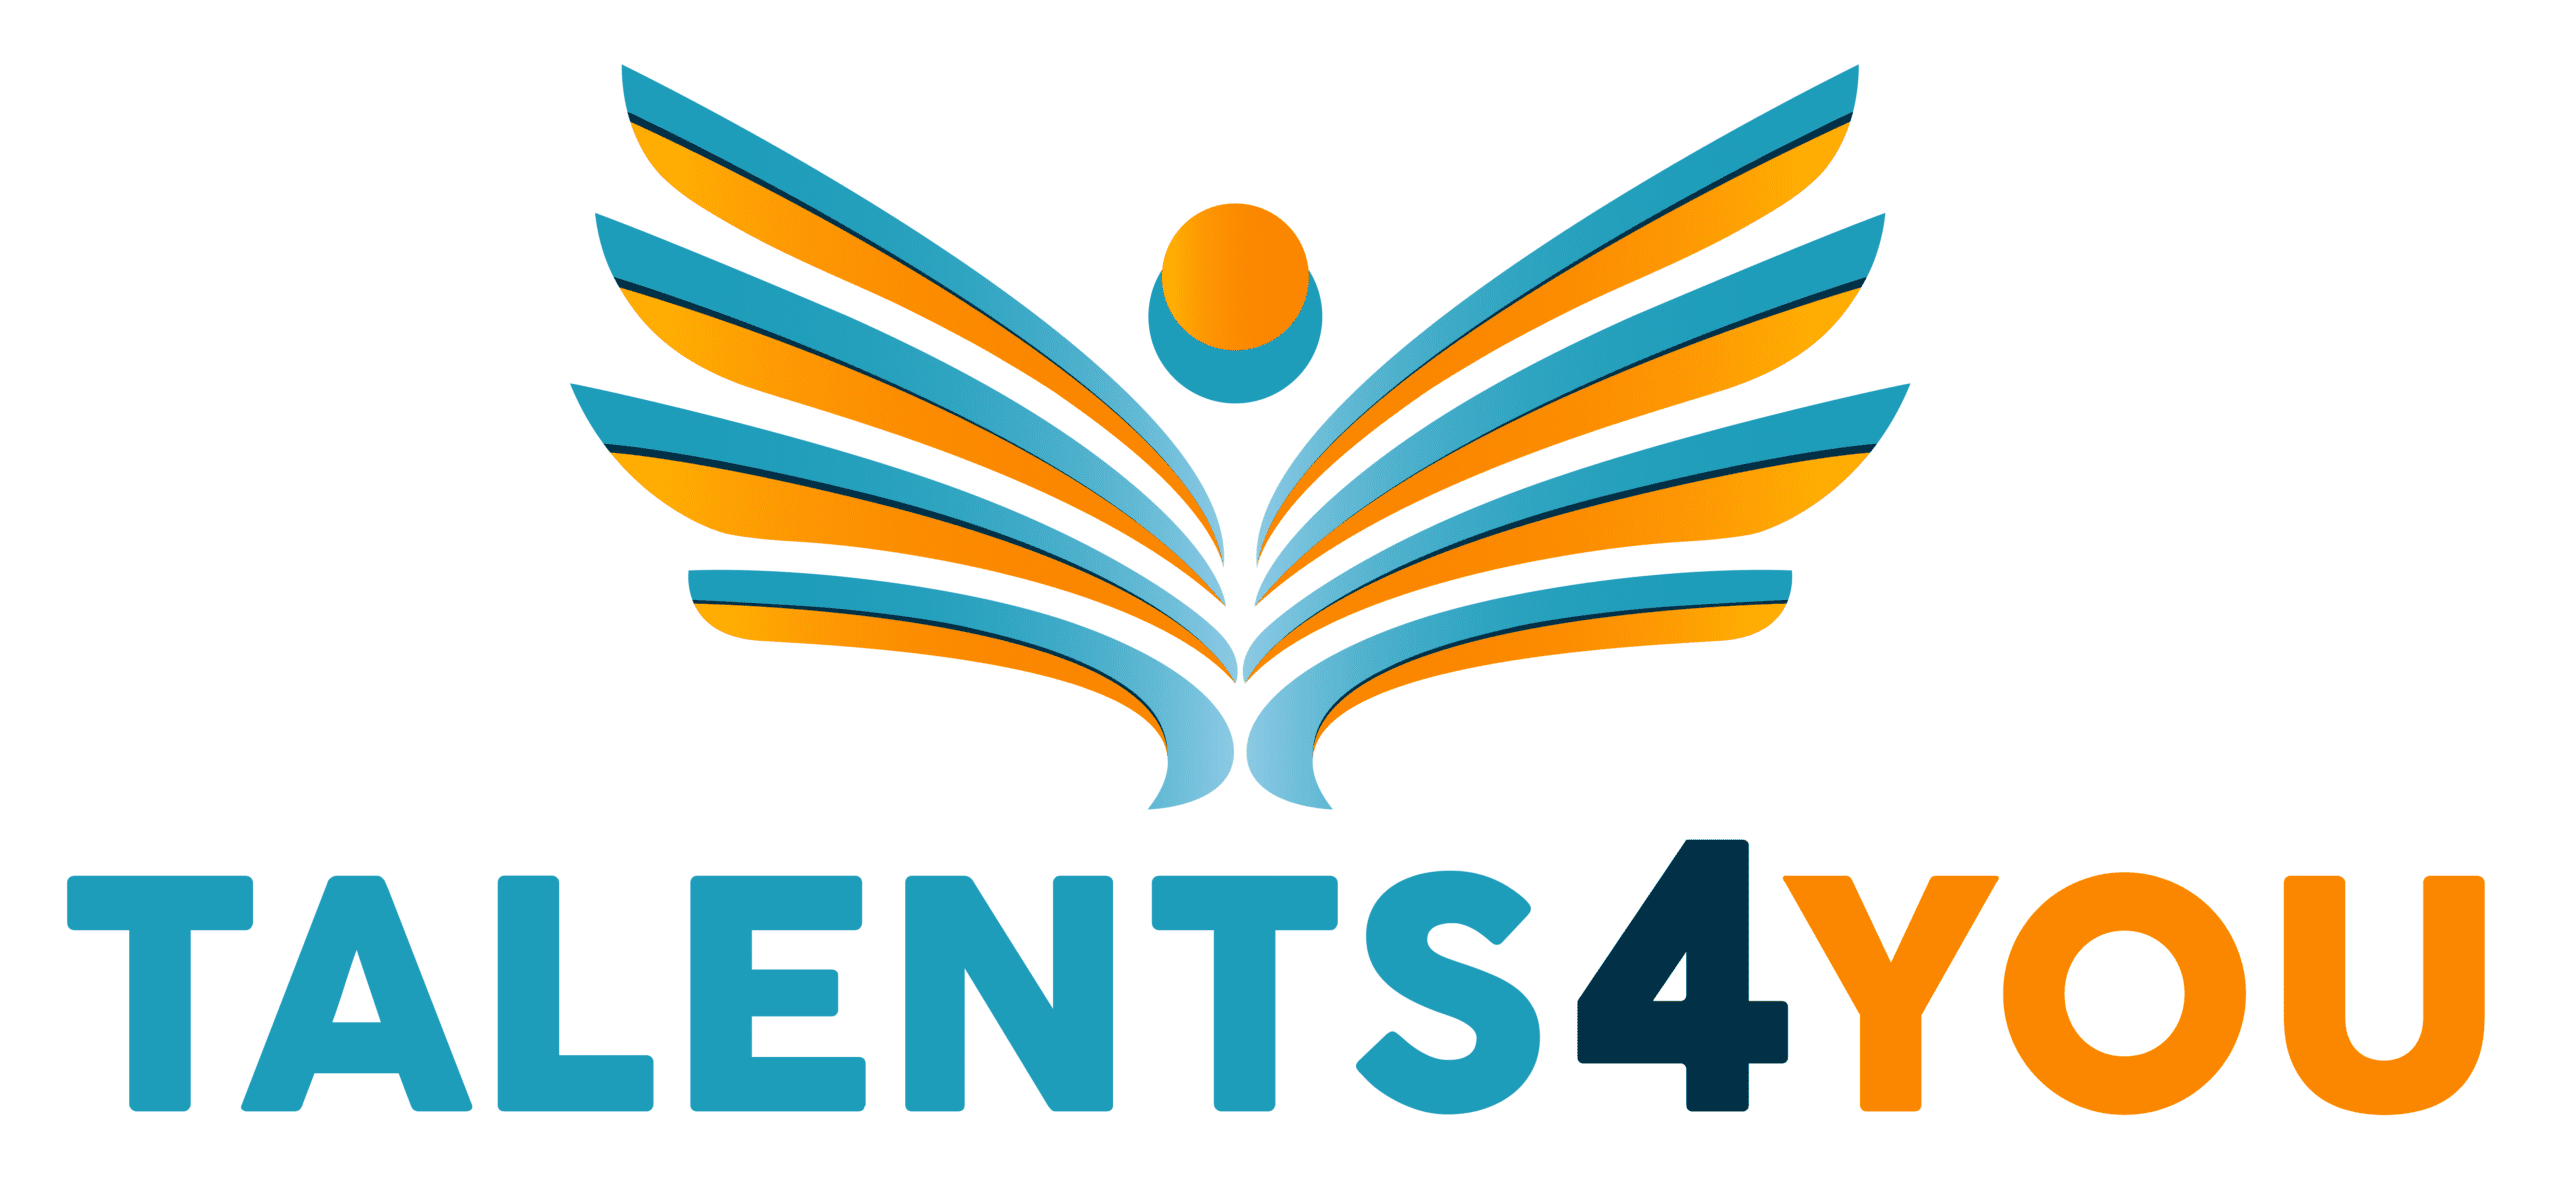 Talents4You logo